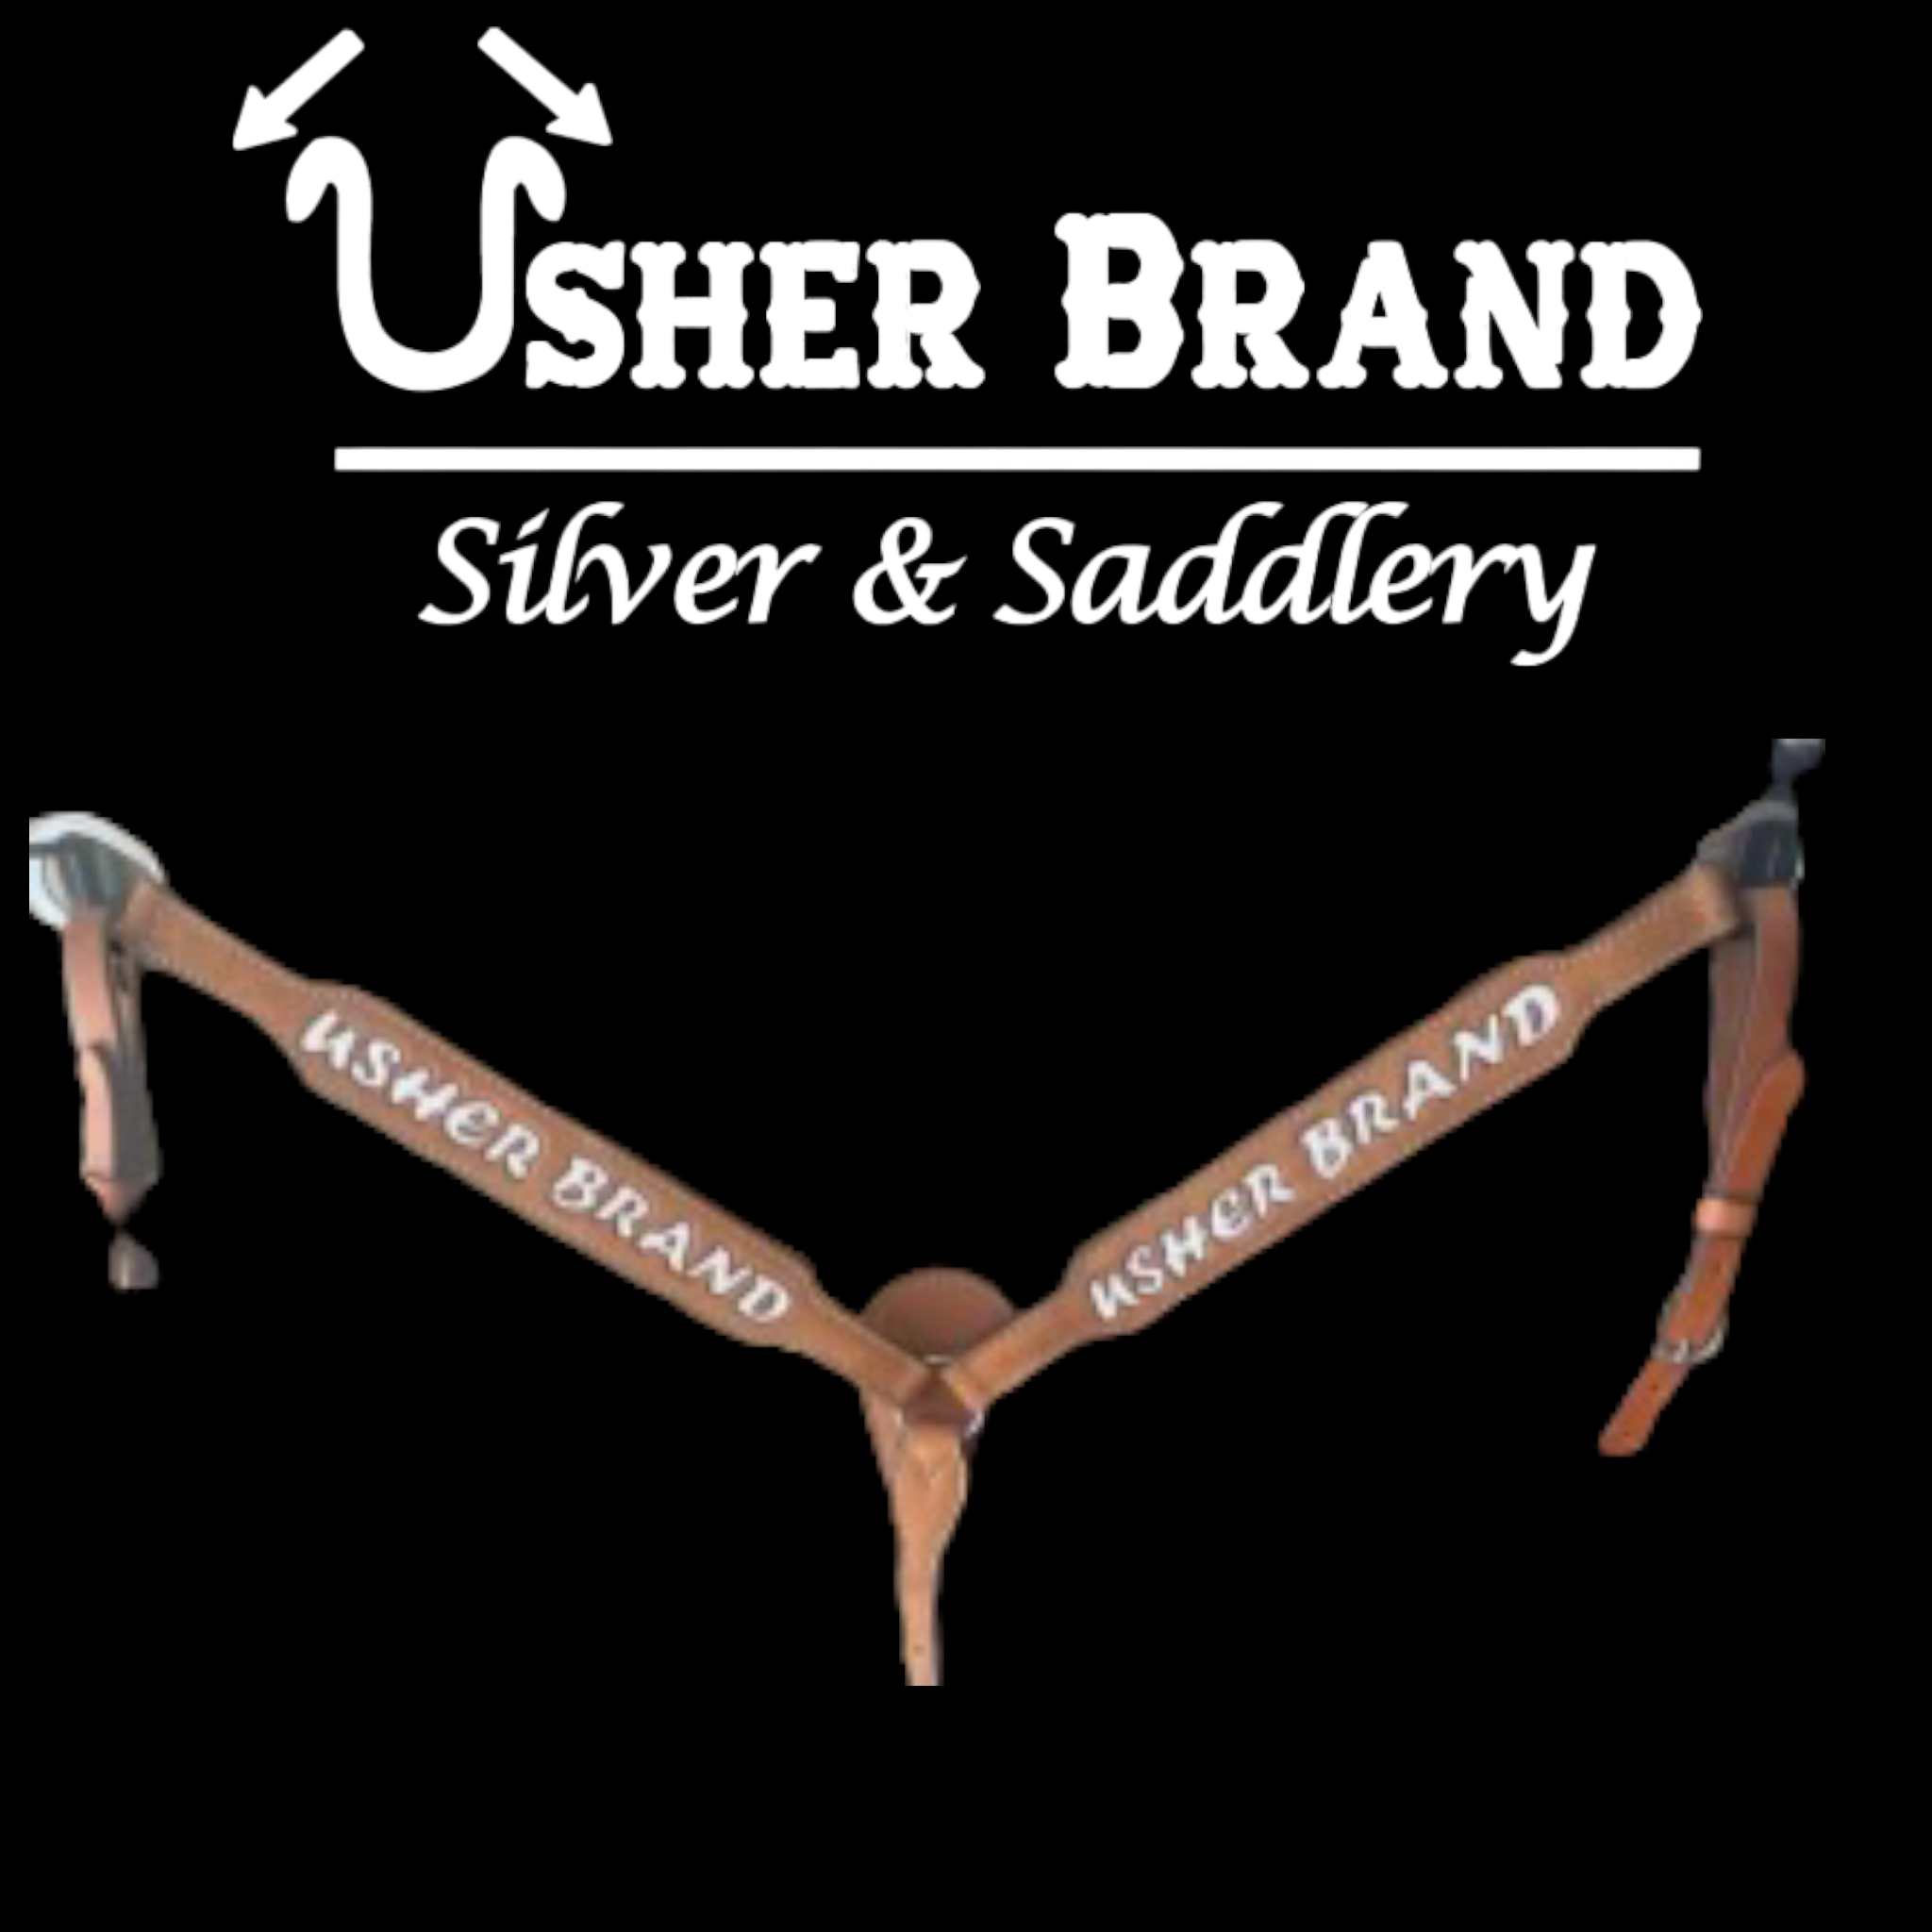 Usher Brand Apparel & Accessories